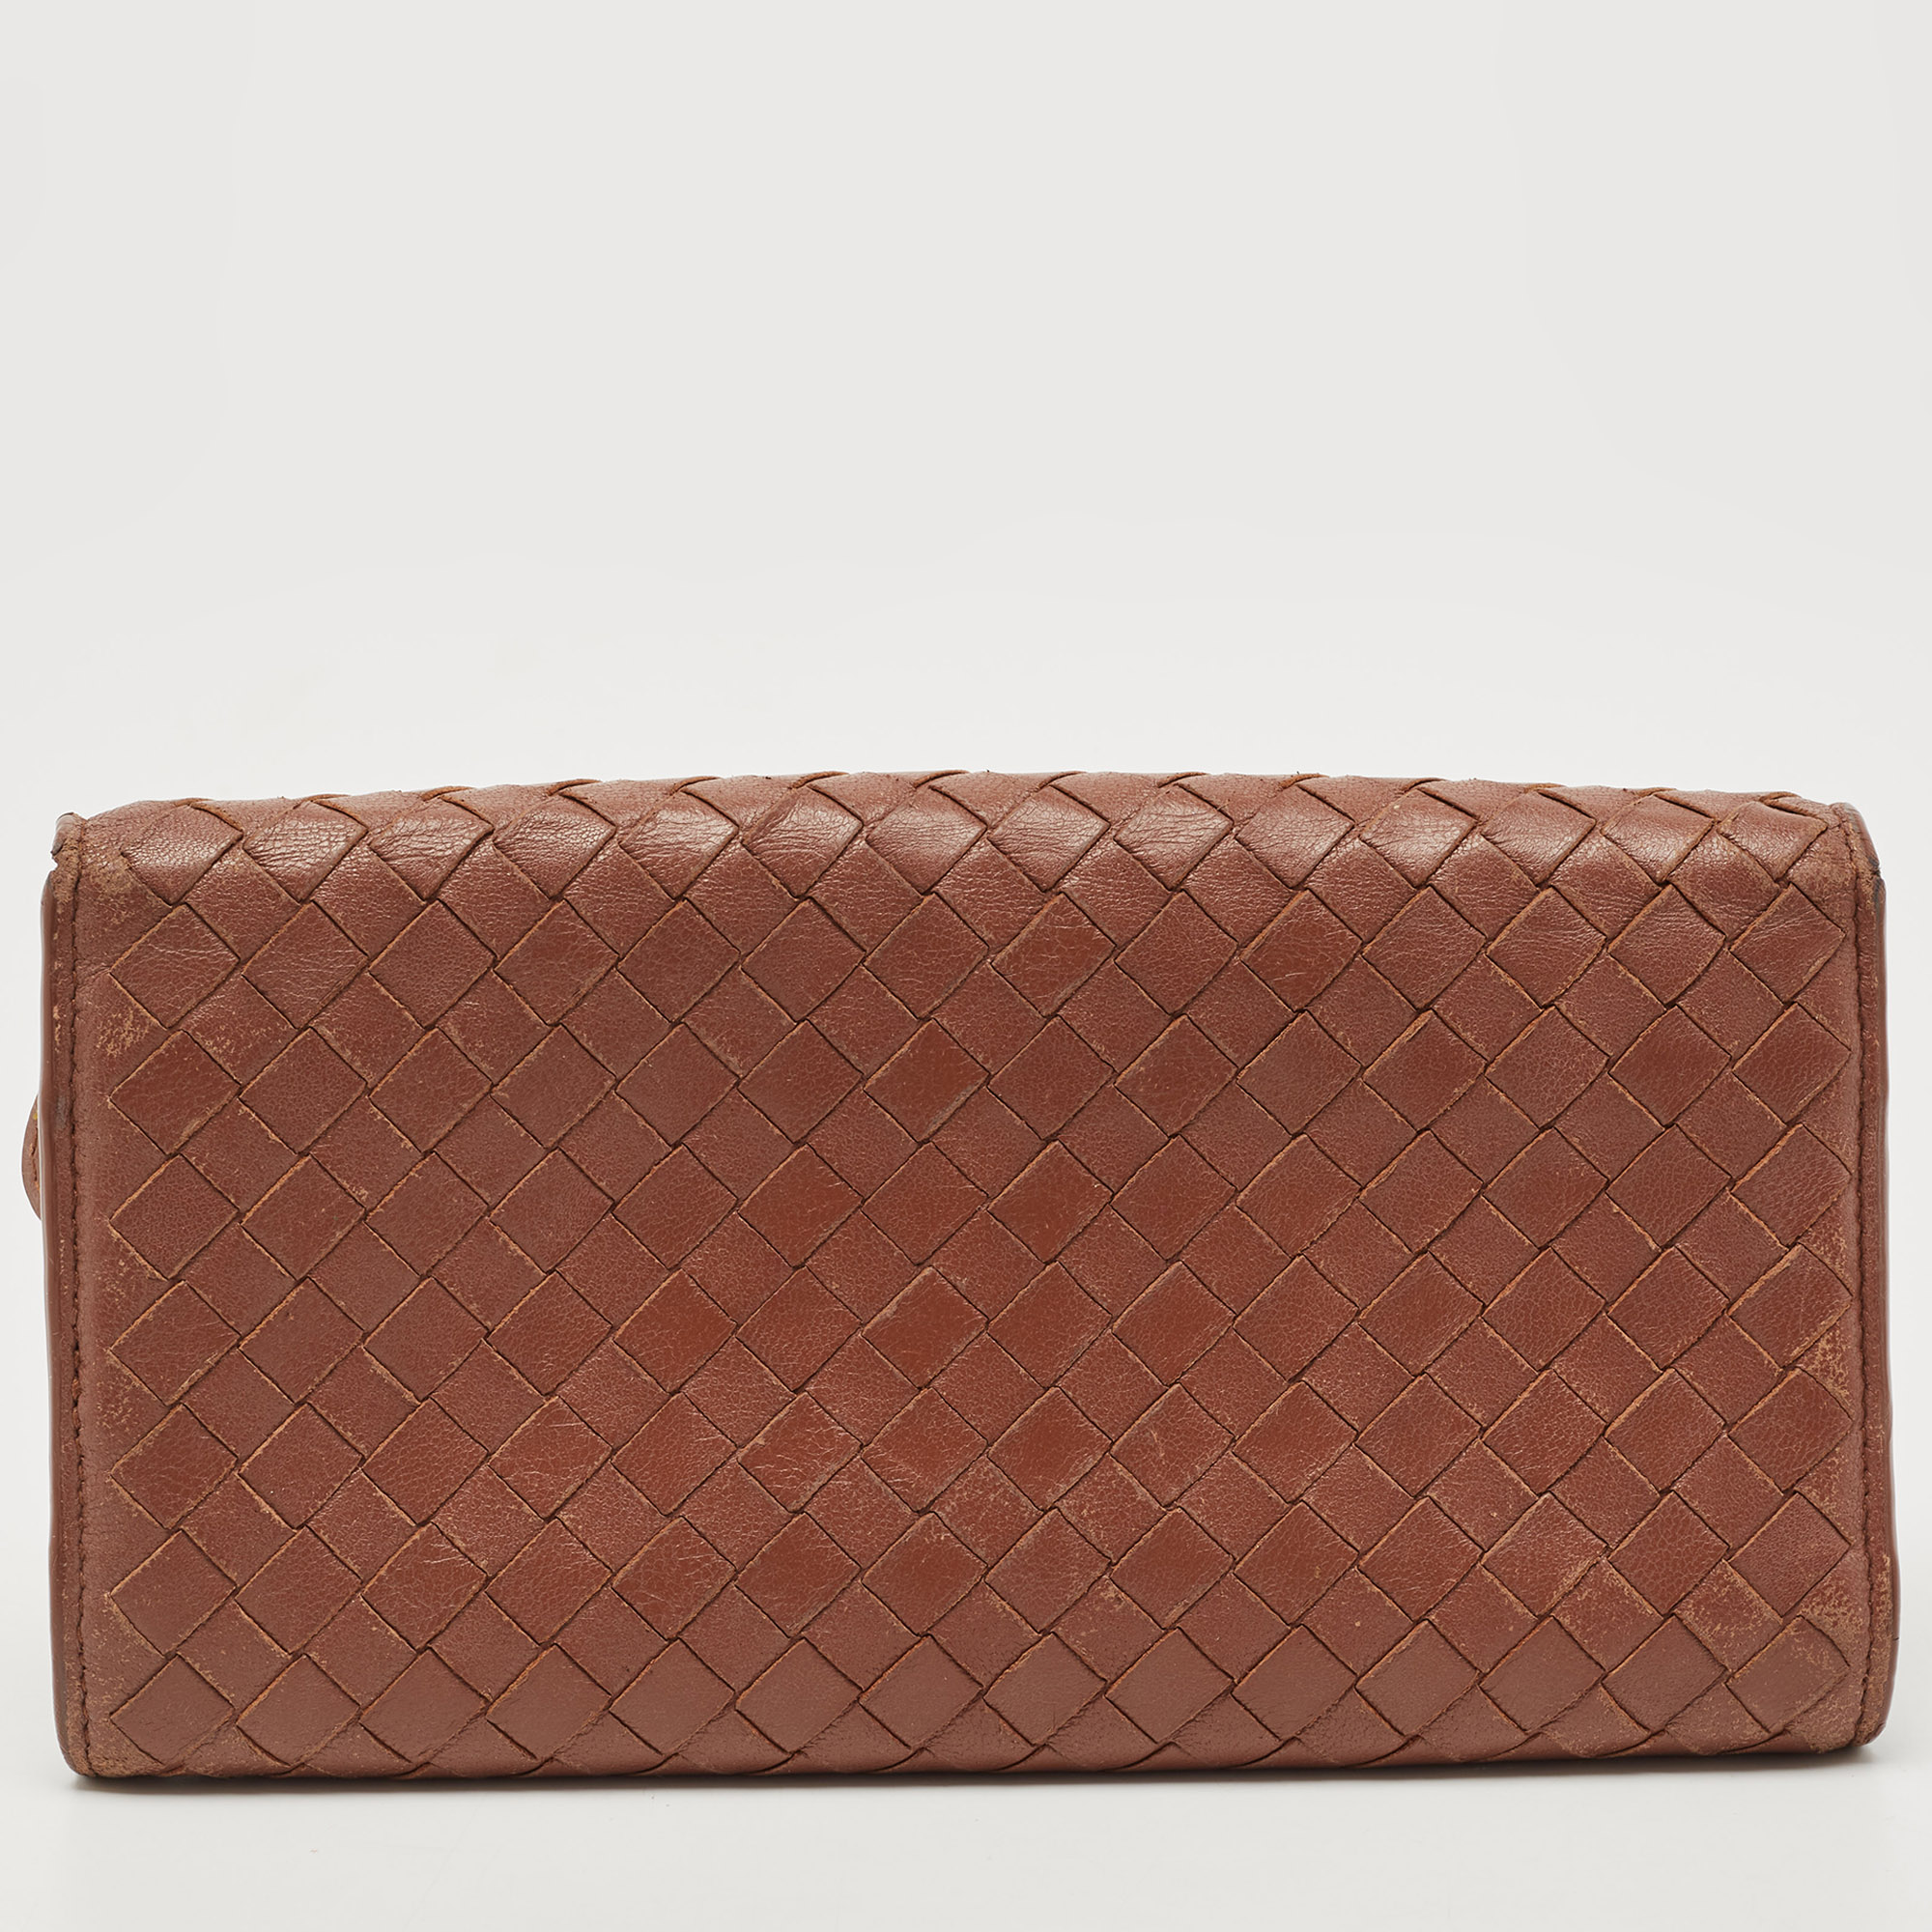 Bottega Veneta Brown Intrecciato Leather Flap Continental Wallet